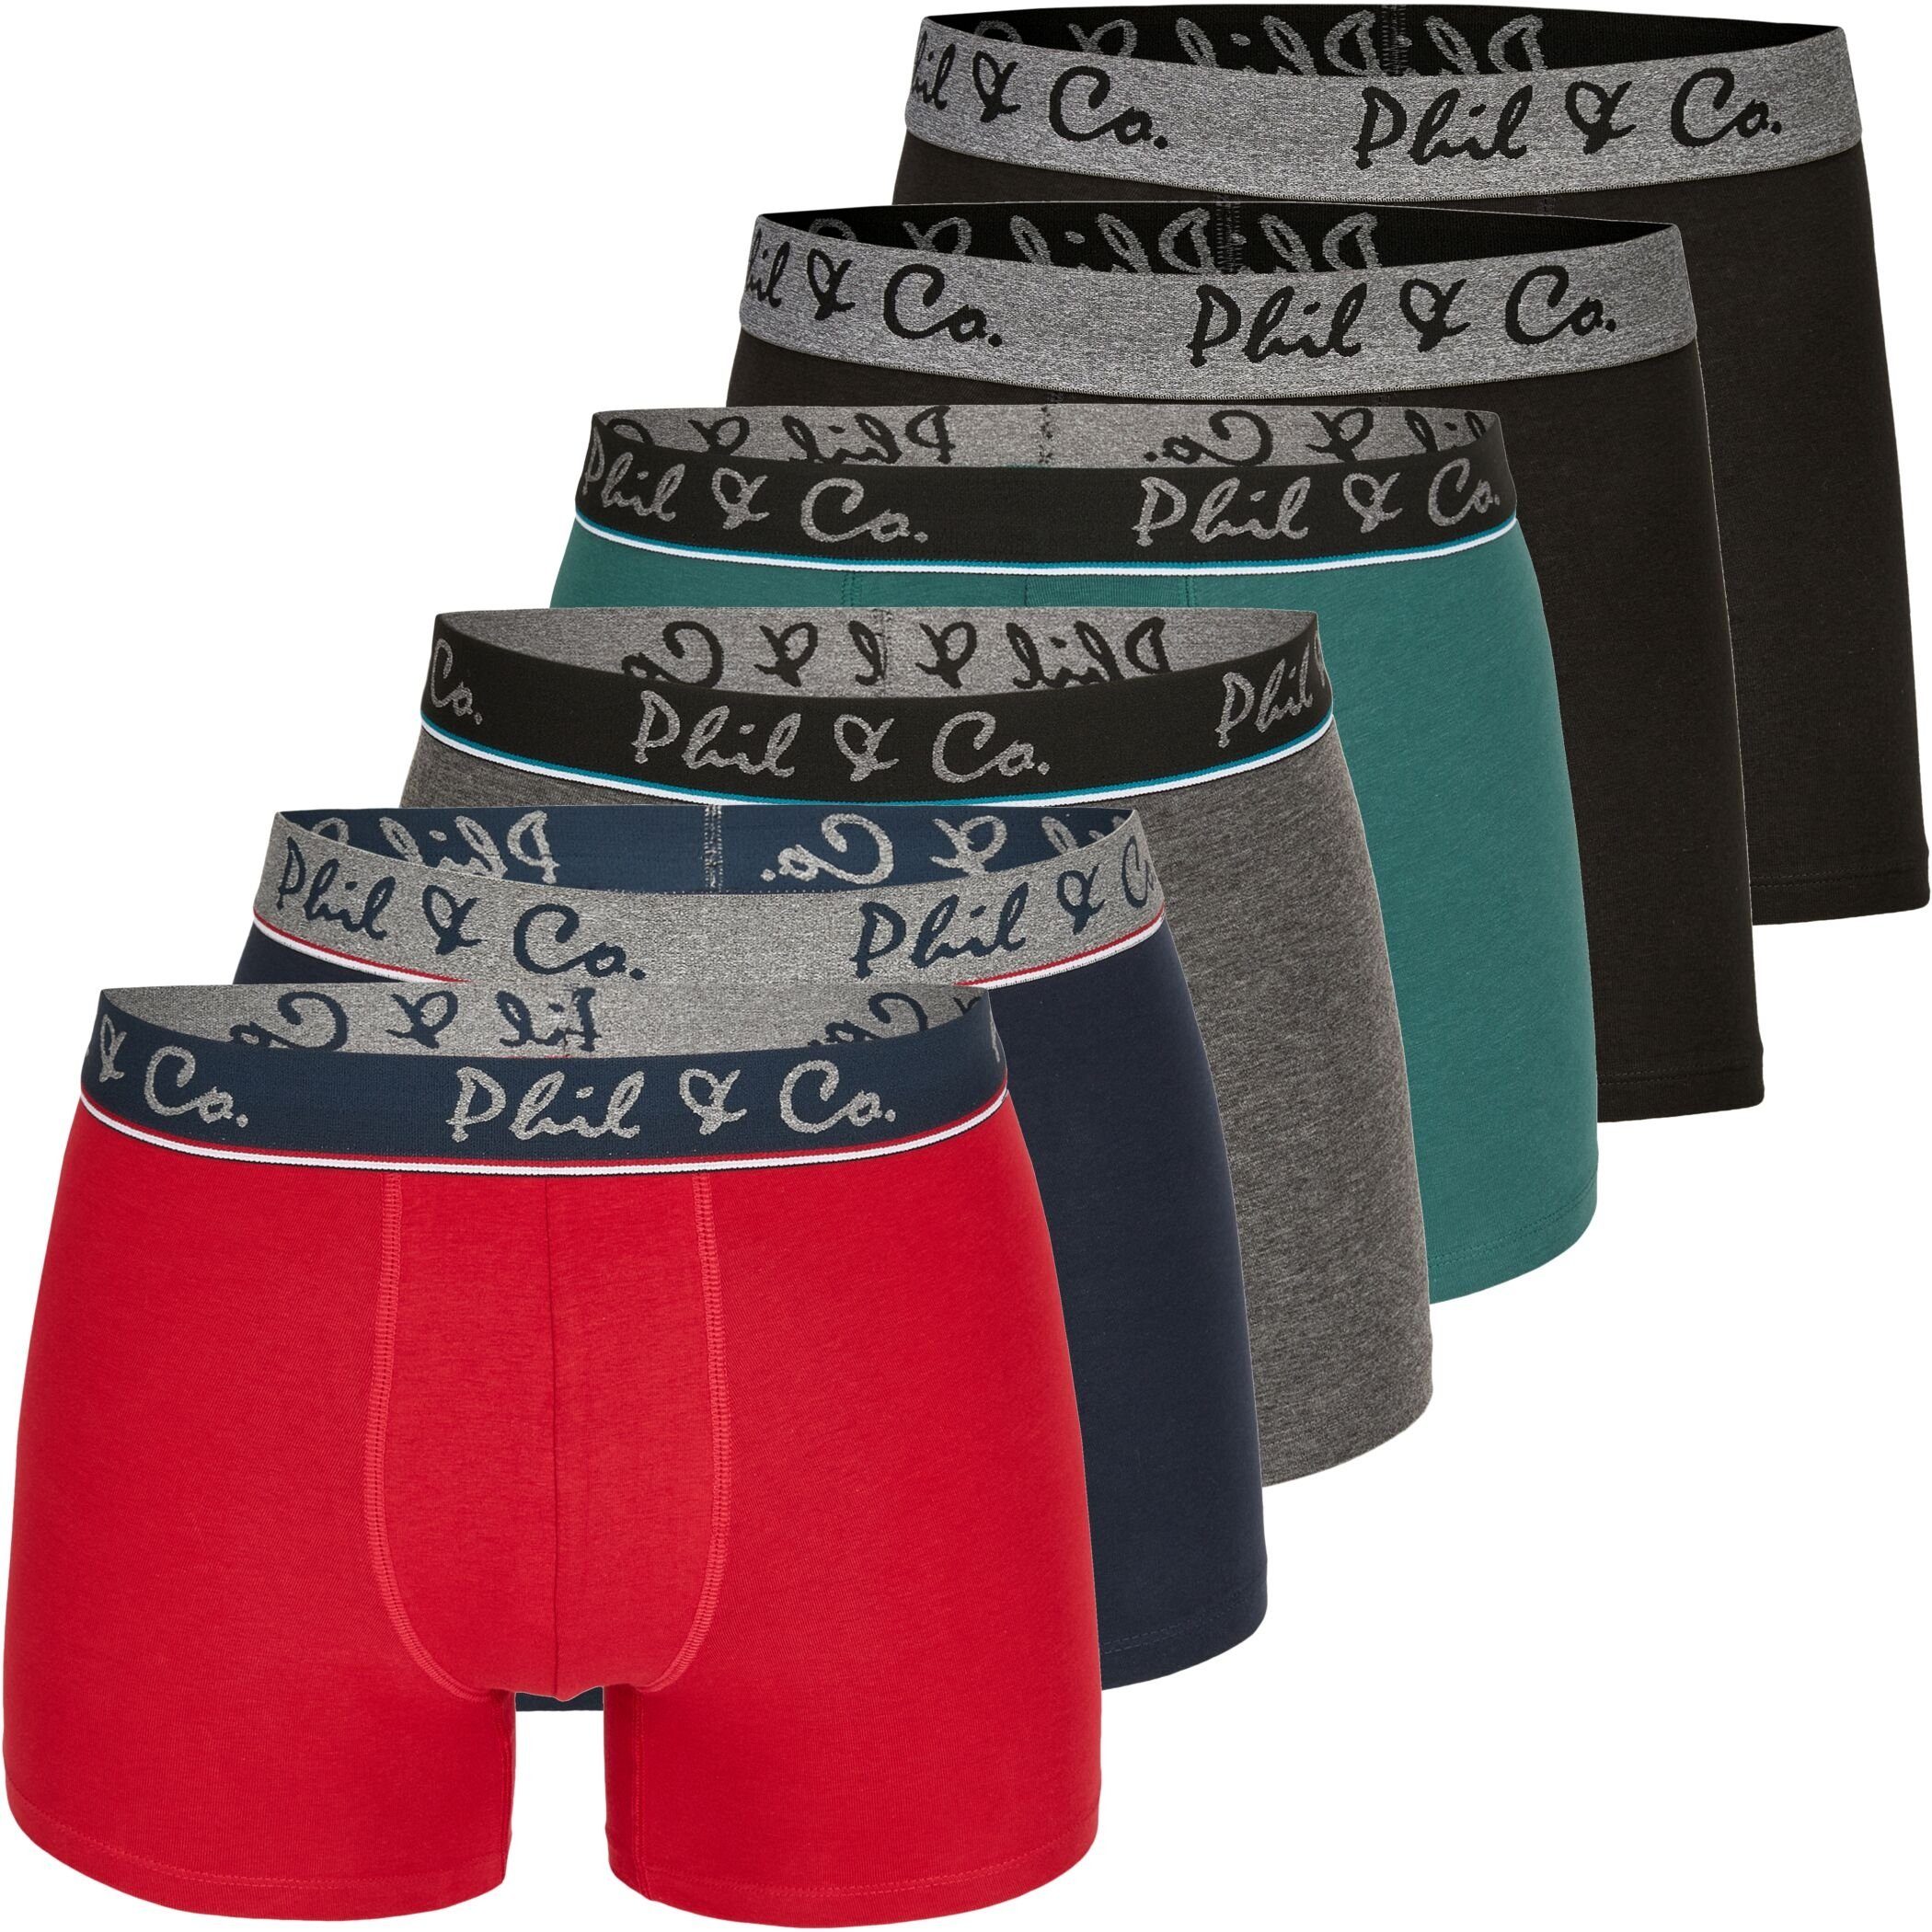 Phil & Co. Boxershorts 6er Pack Phil & Co Berlin Jersey Boxershorts Trunk Short Pant FARBWAHL (1-St) DESIGN 15